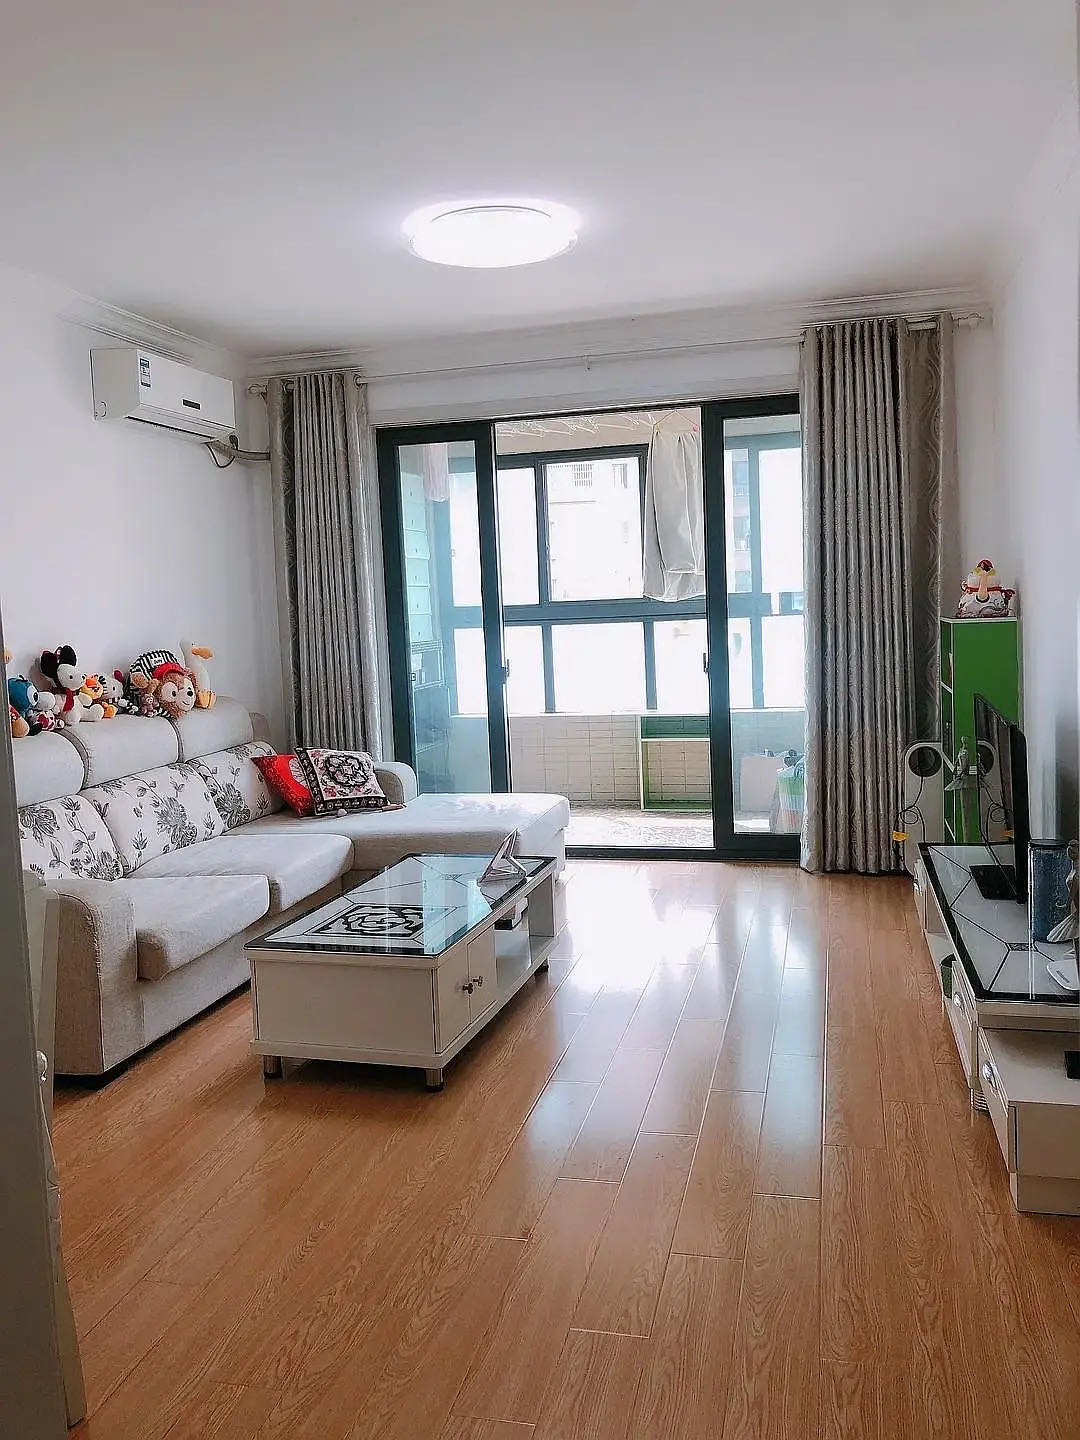 Shanghai-Minhang-Cozy Home,Clean&Comfy,No Gender Limit,LGBTQ Friendly